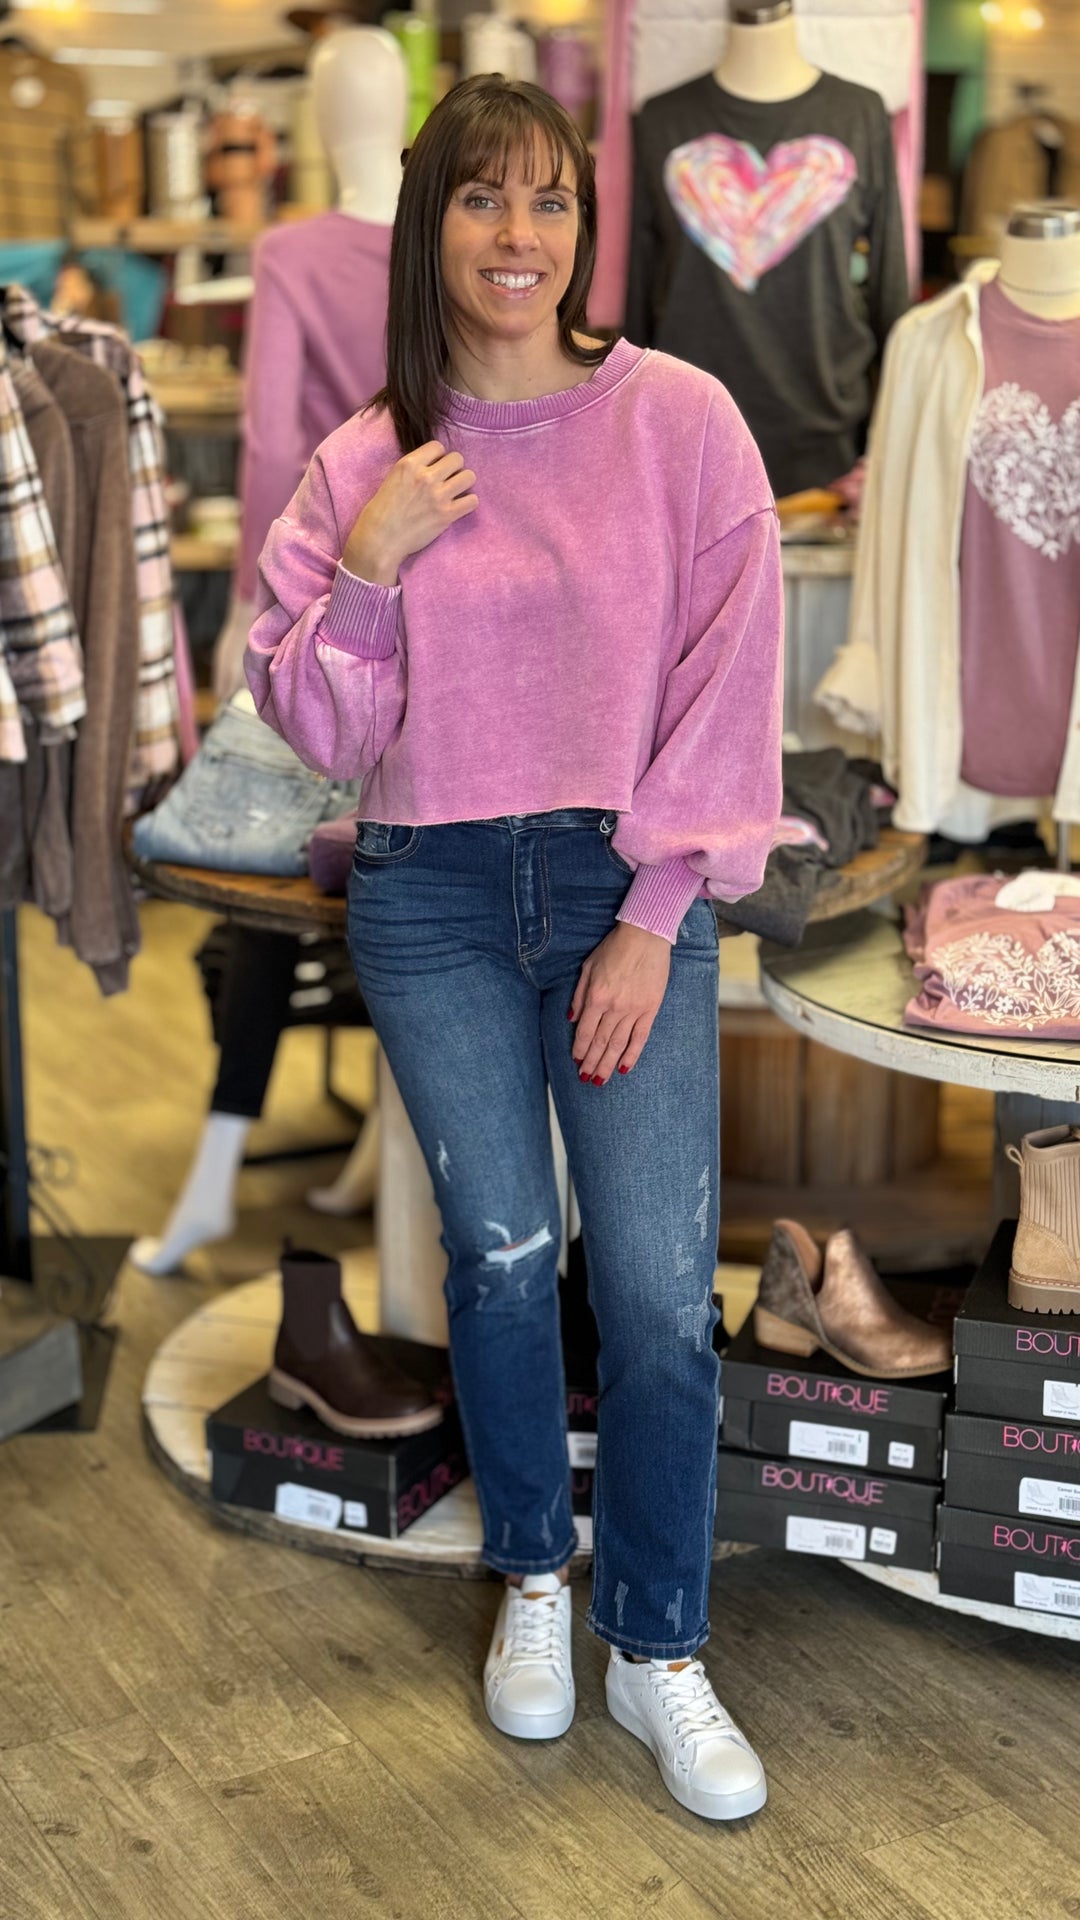 Zenana Acid Washed Fleece Cropped Pullover-Sweatshirts-Zenana-Evergreen Boutique, Women’s Fashion Boutique in Santa Claus, Indiana